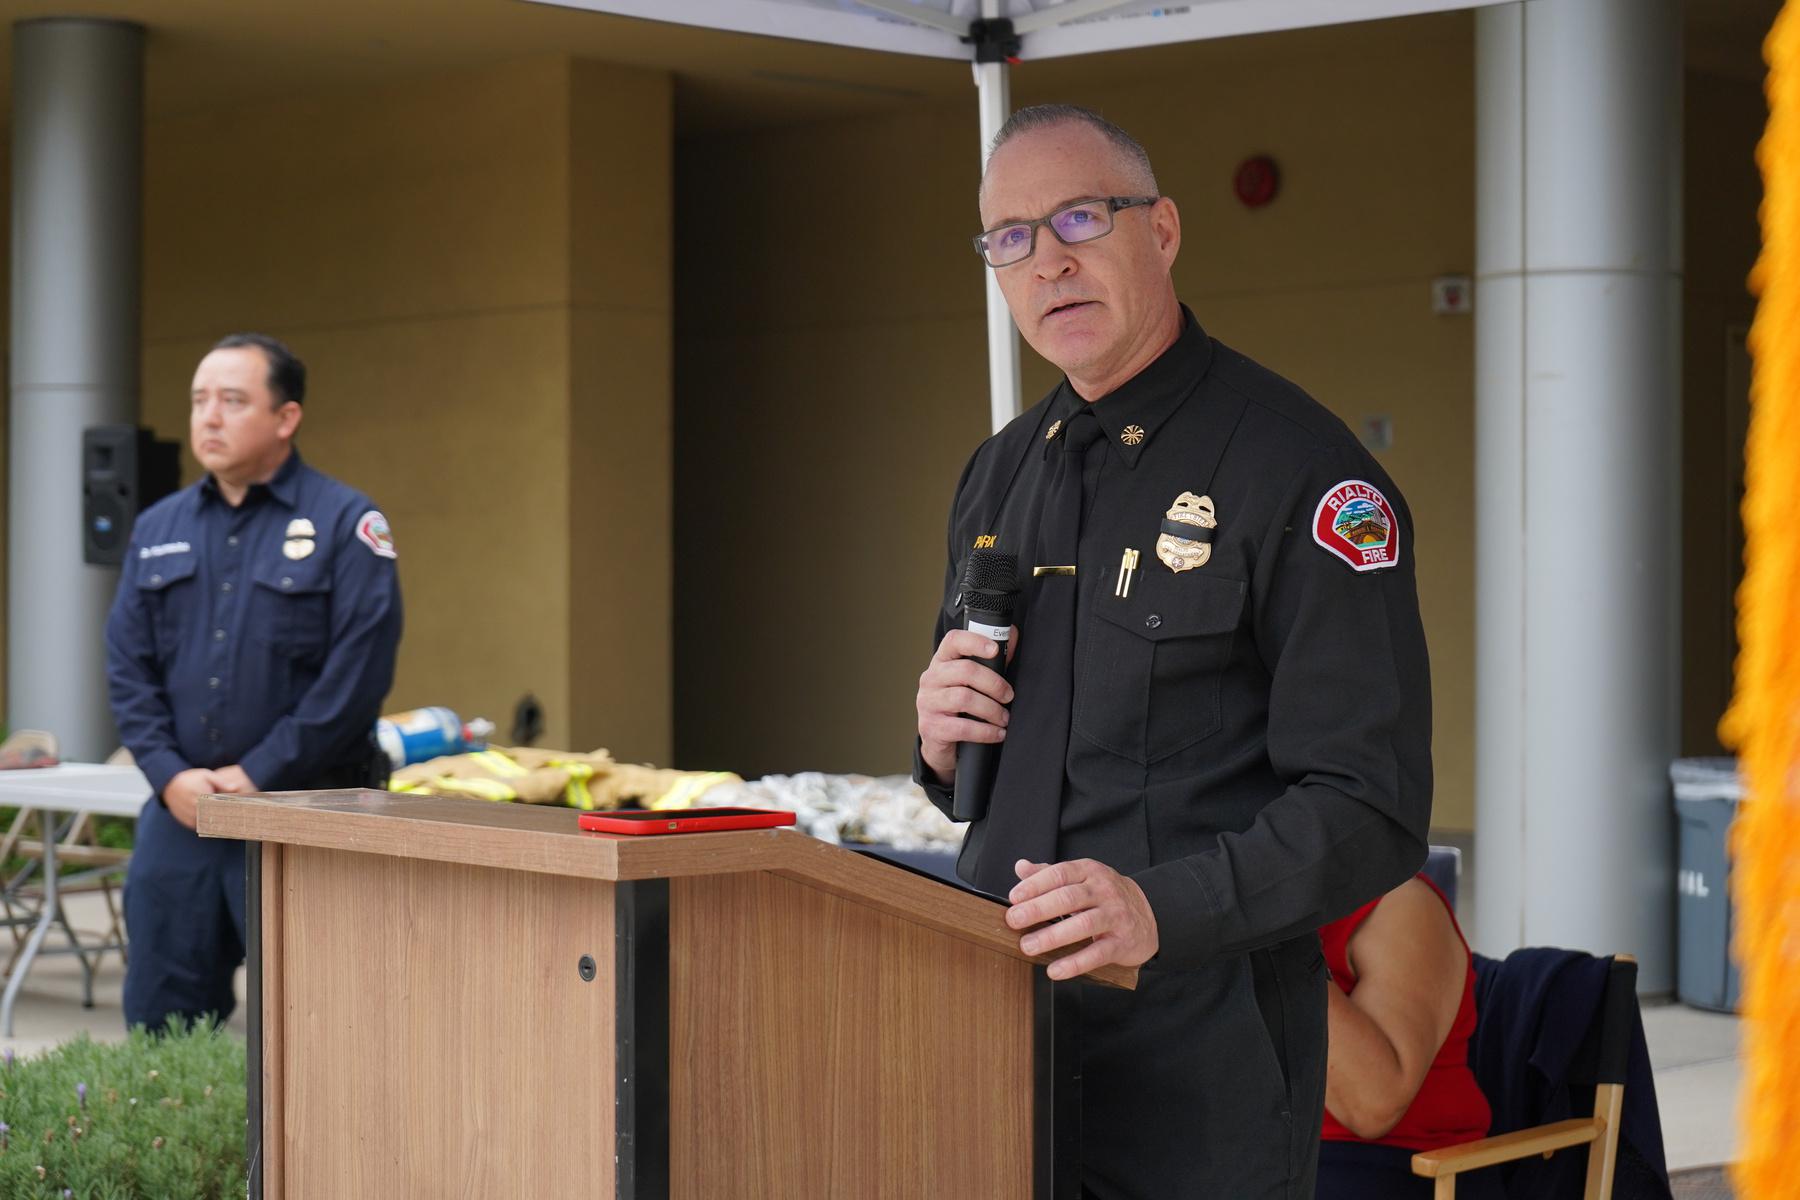 Rialto Fire Department Chief Brian Park spoke at the event.